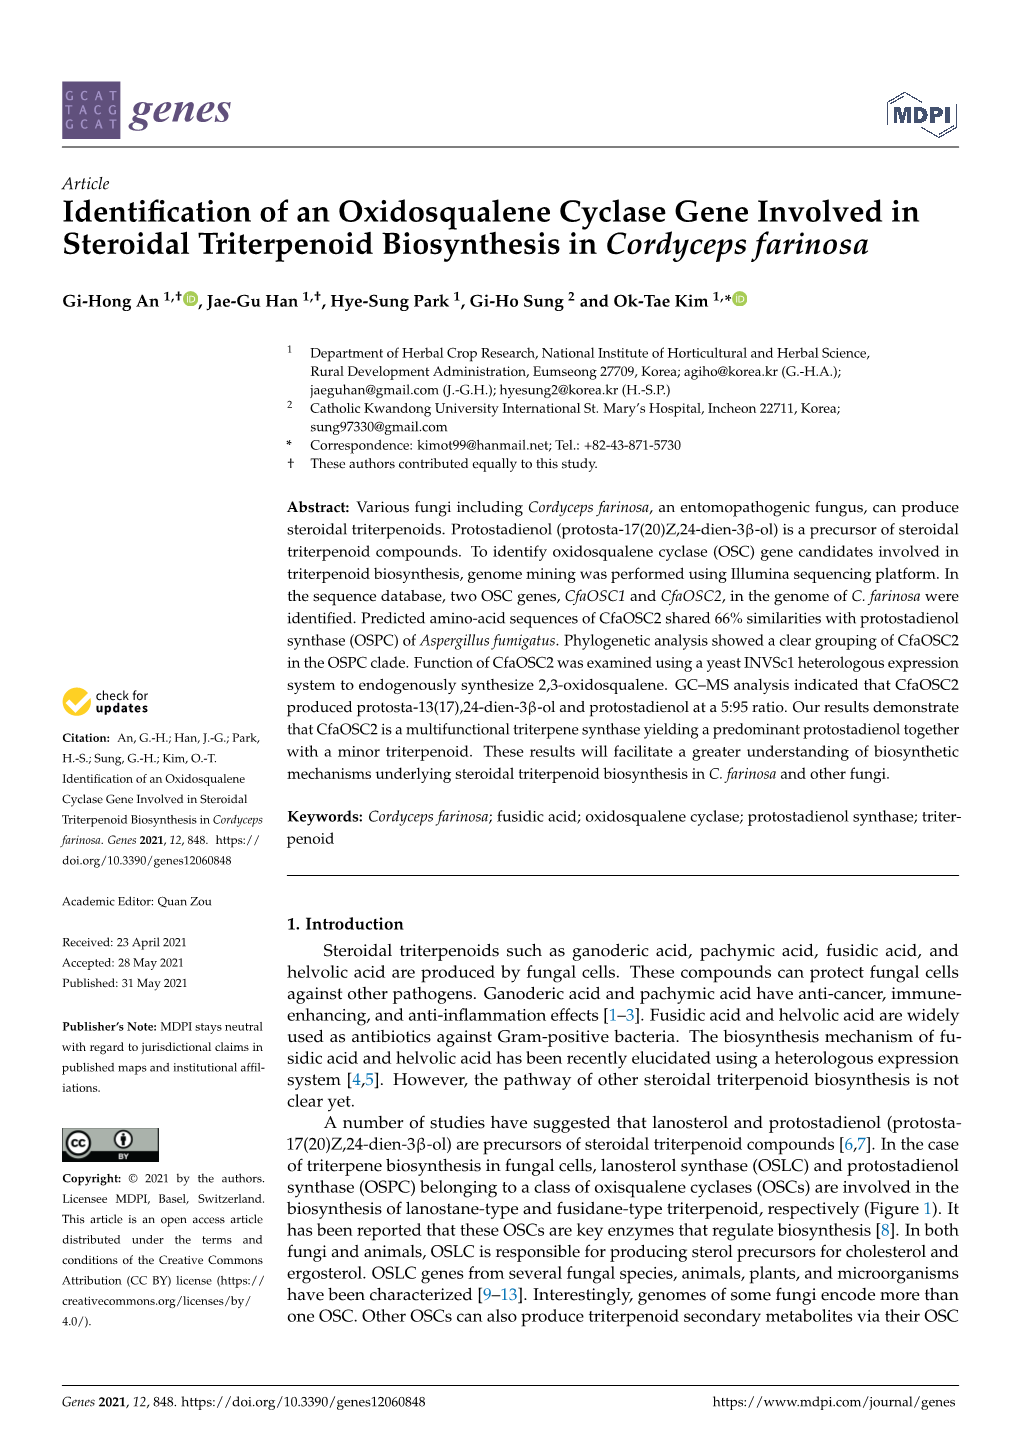 Identification of an Oxidosqualene Cyclase Gene Involved in Steroidal Triterpenoid Biosynthesis in Cordyceps Farinosa